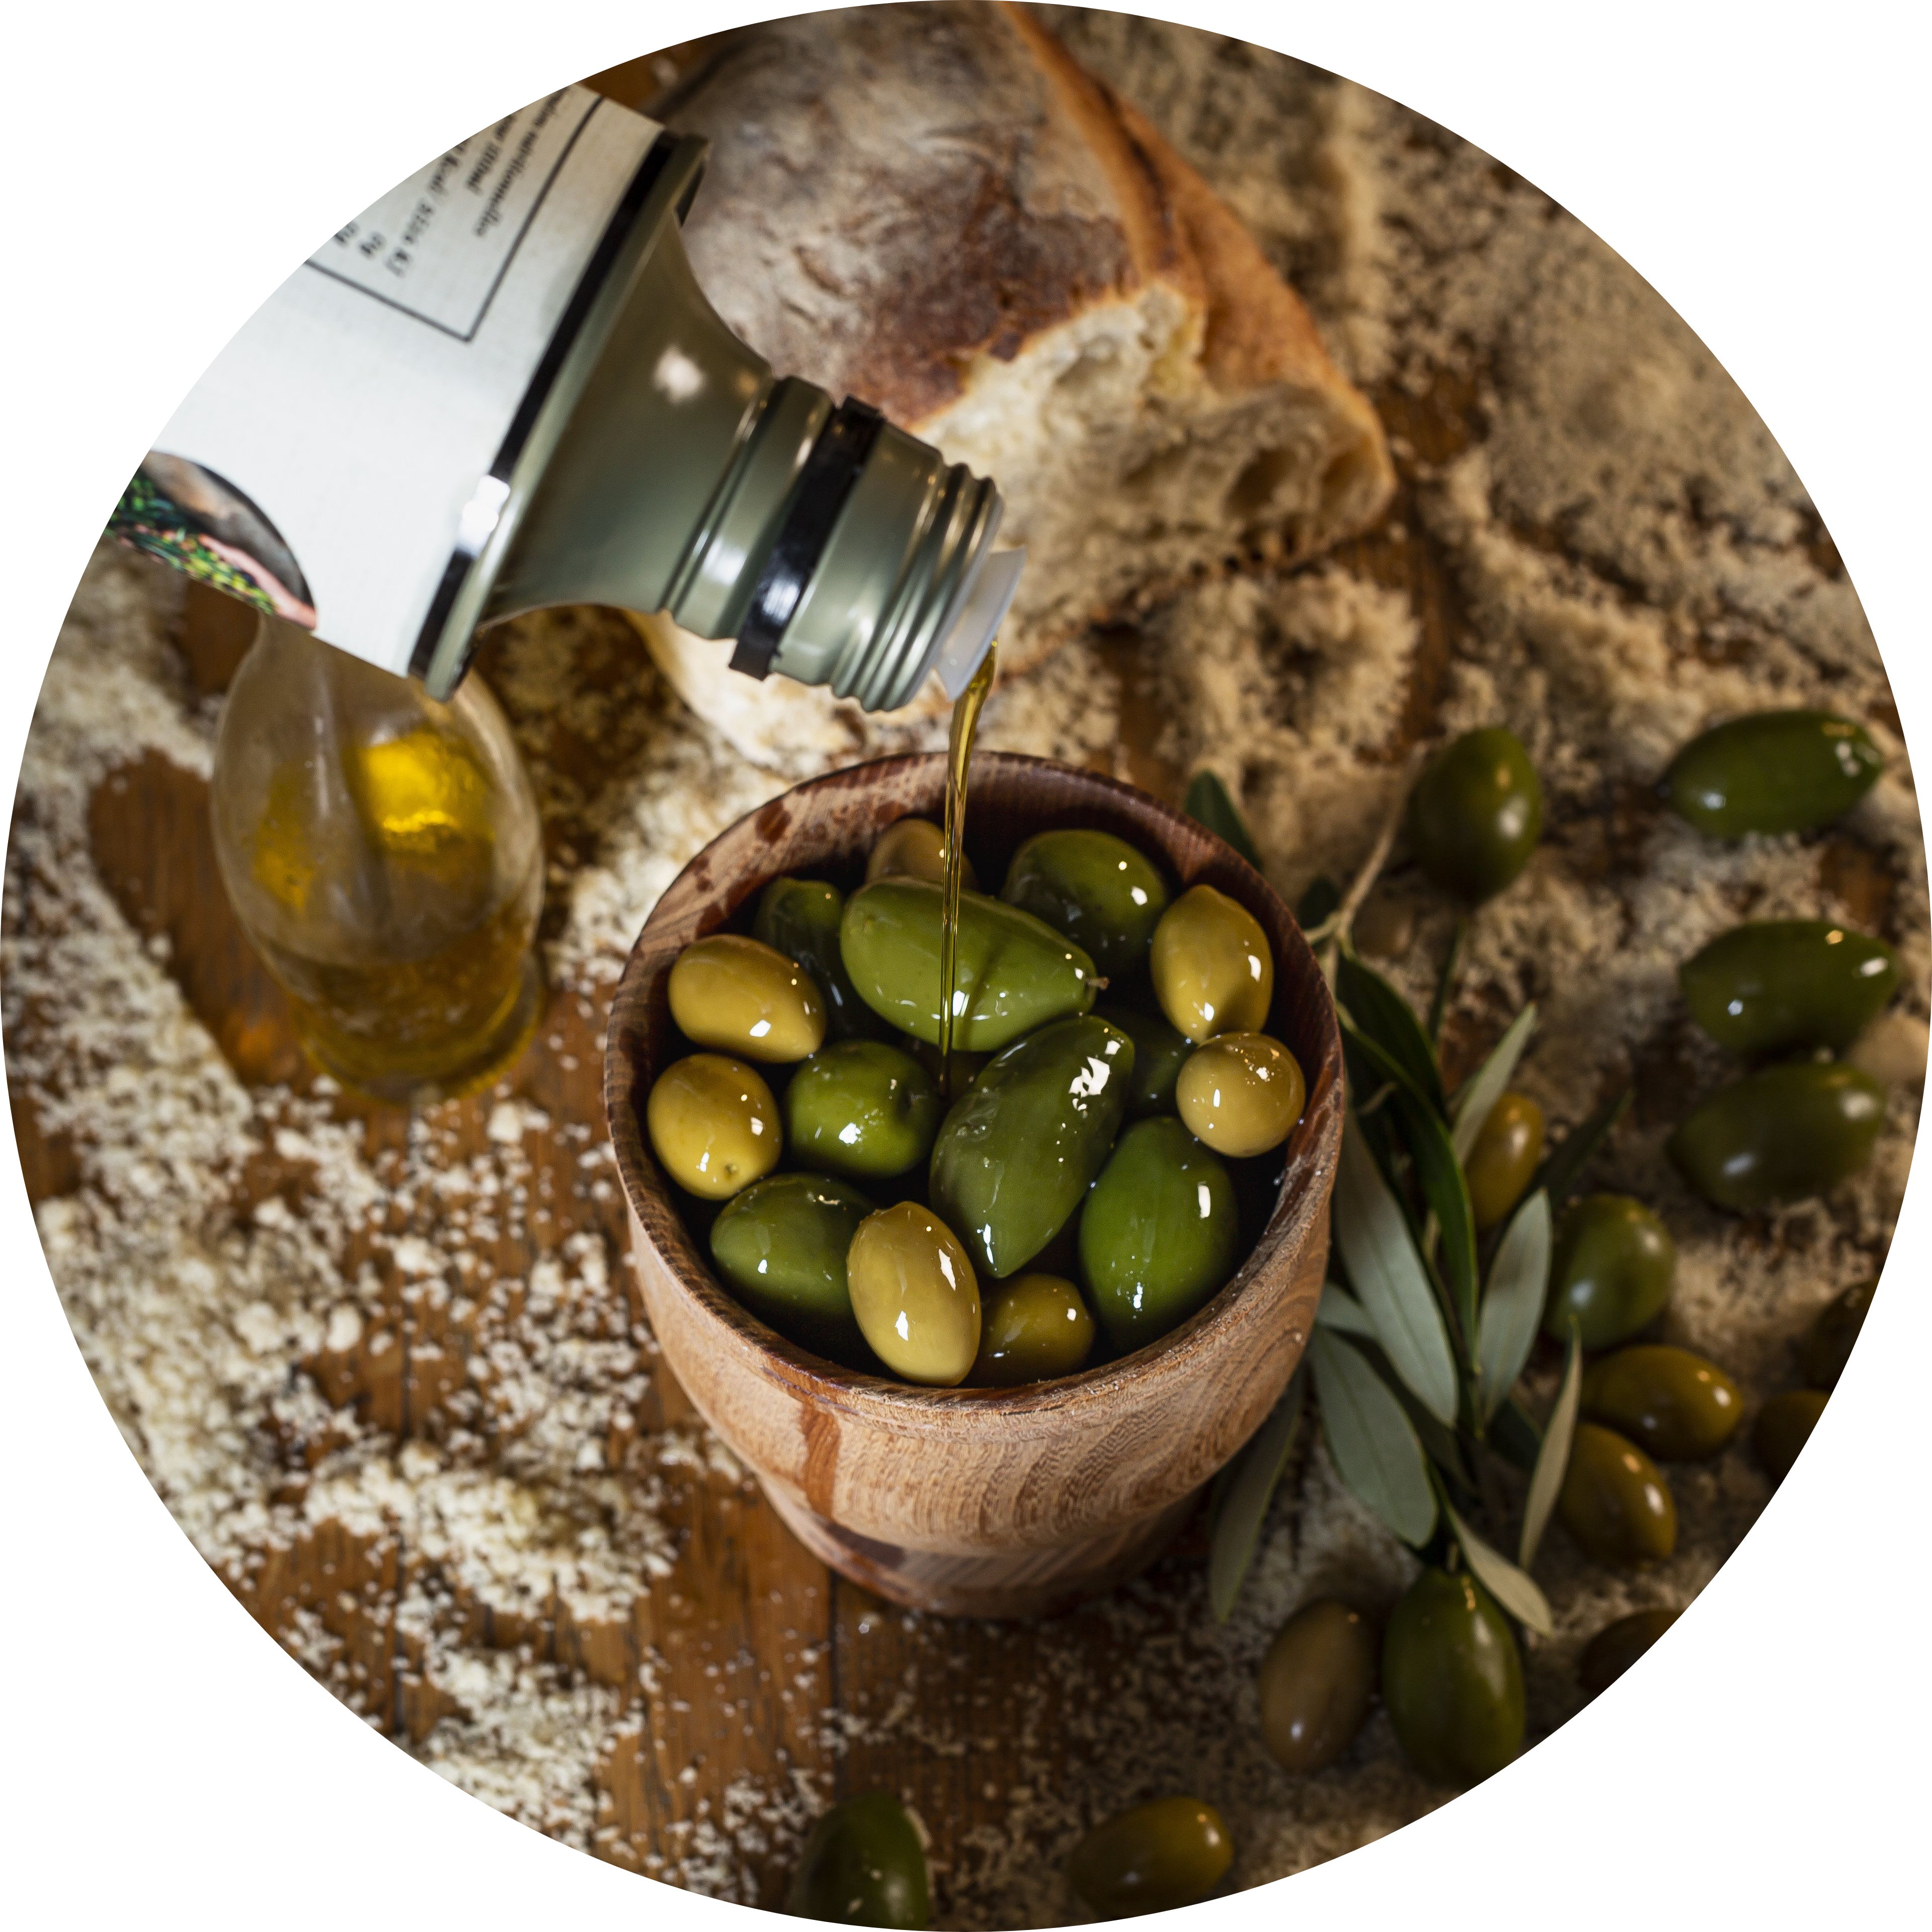 Huile d'olive bio de Sicile